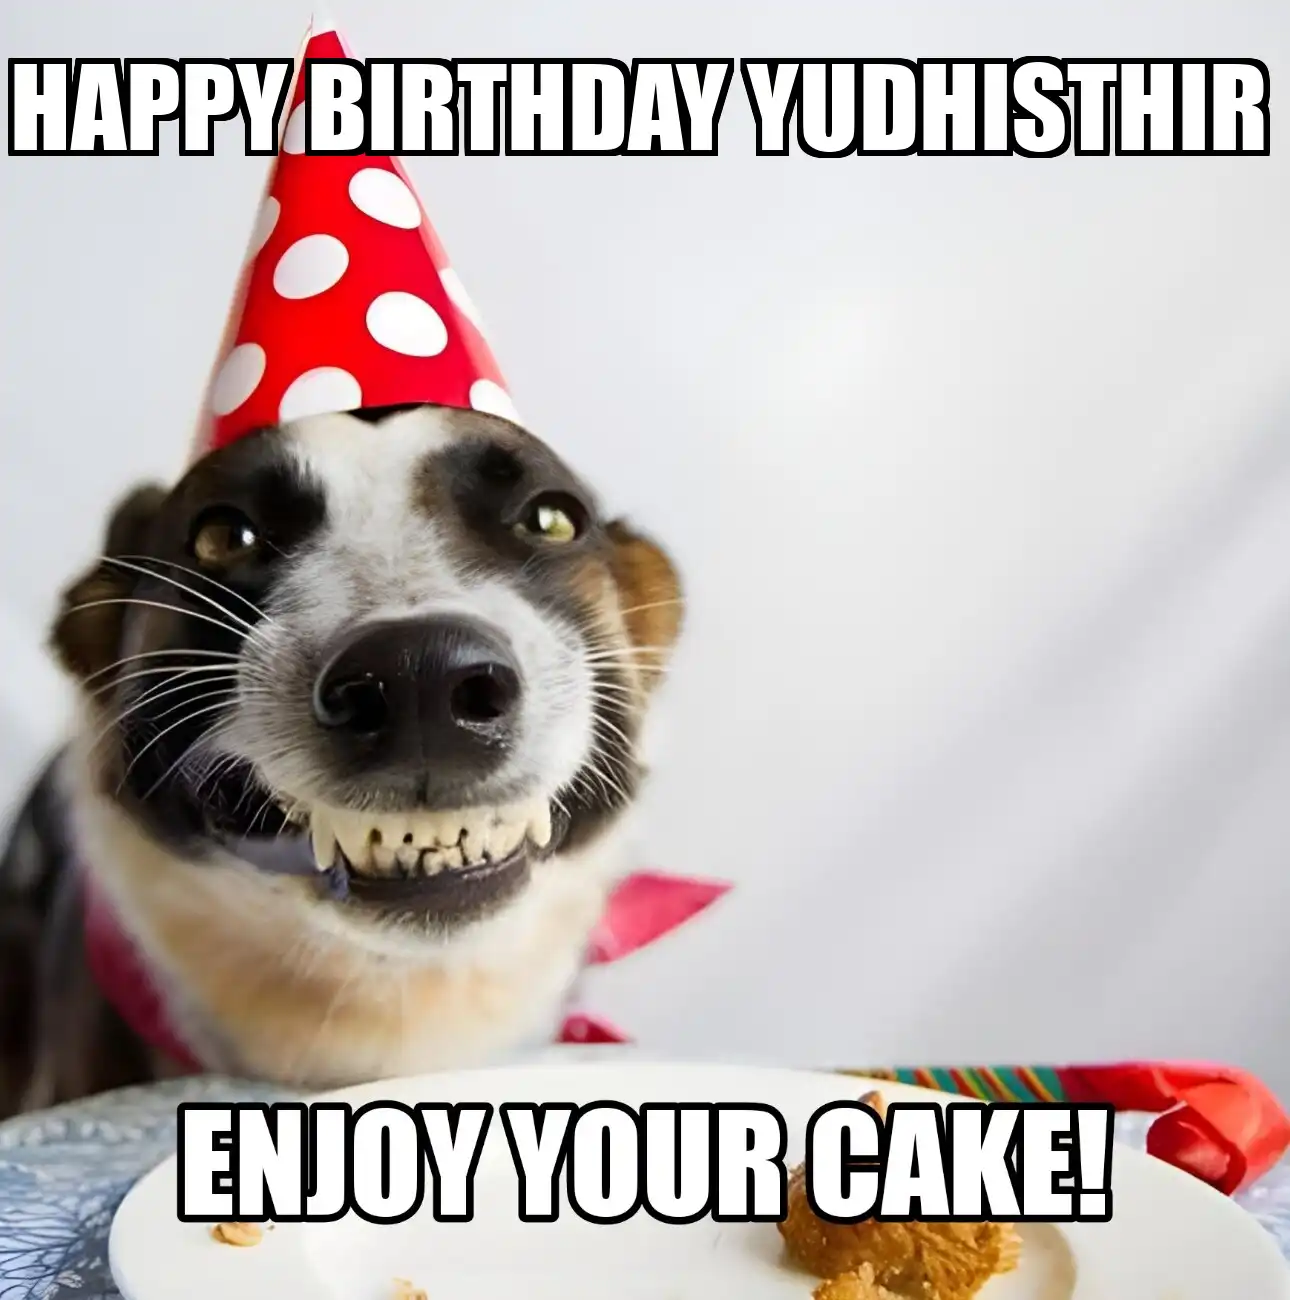 Happy Birthday Yudhisthir Enjoy Your Cake Dog Meme